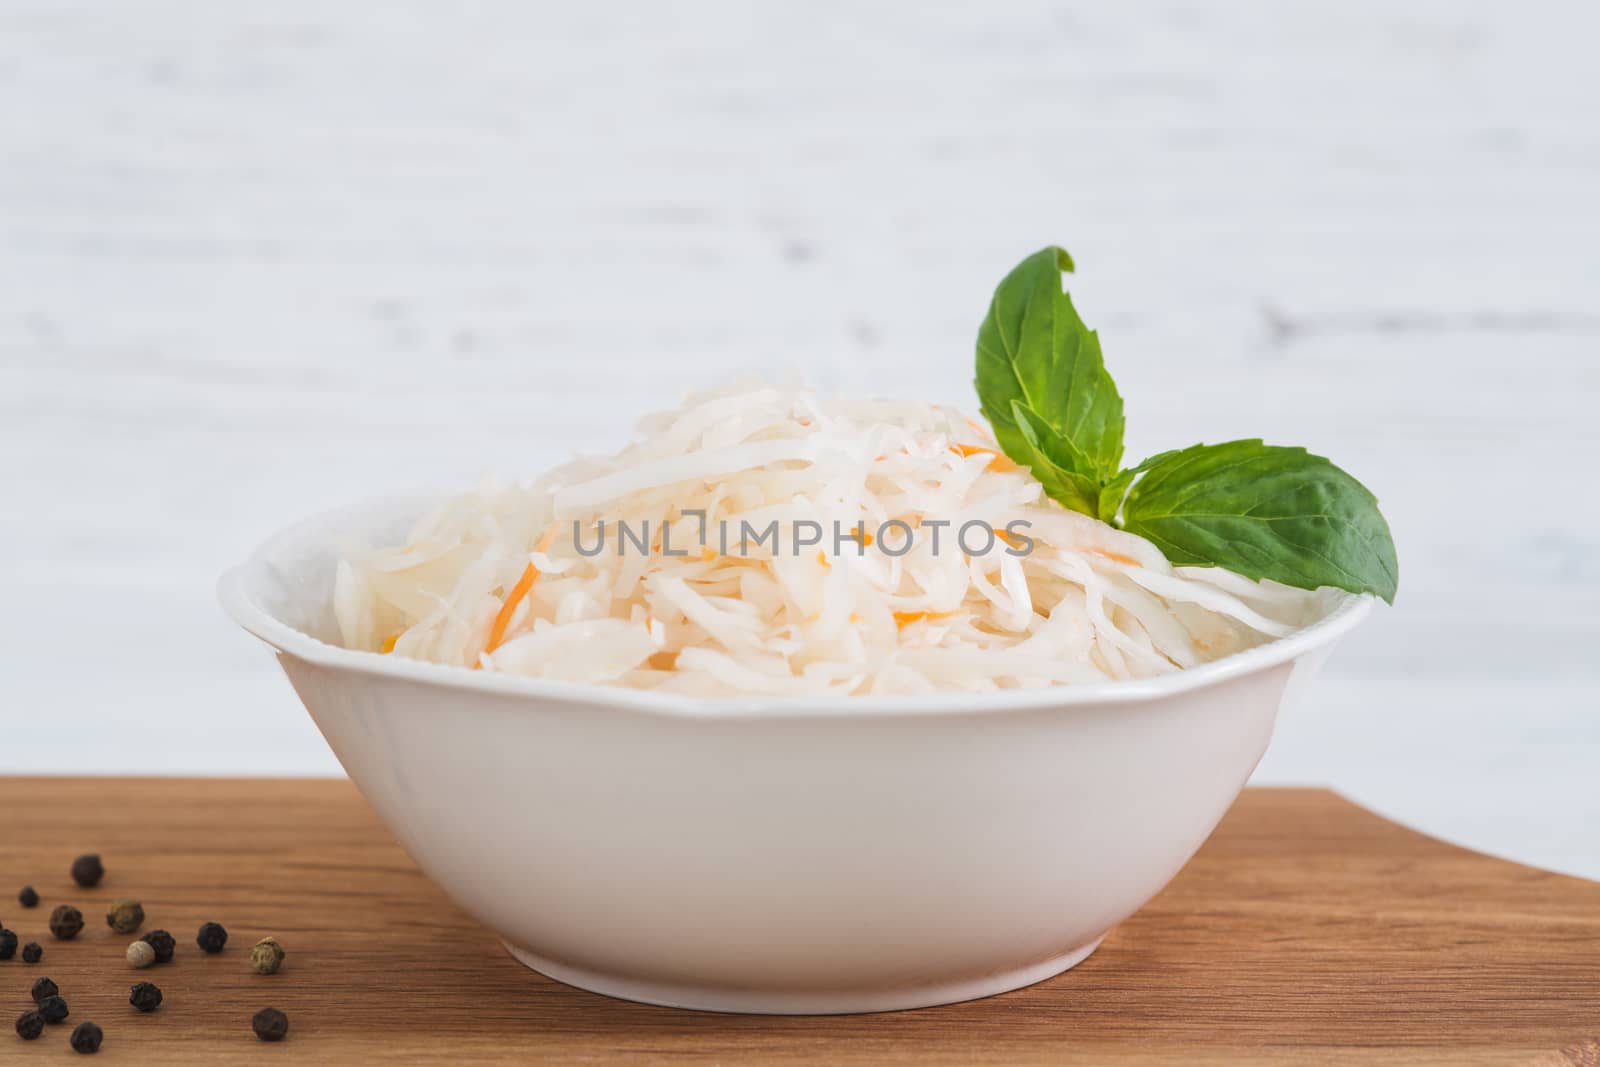 The sauerkraut in ceramic bowl by kzen